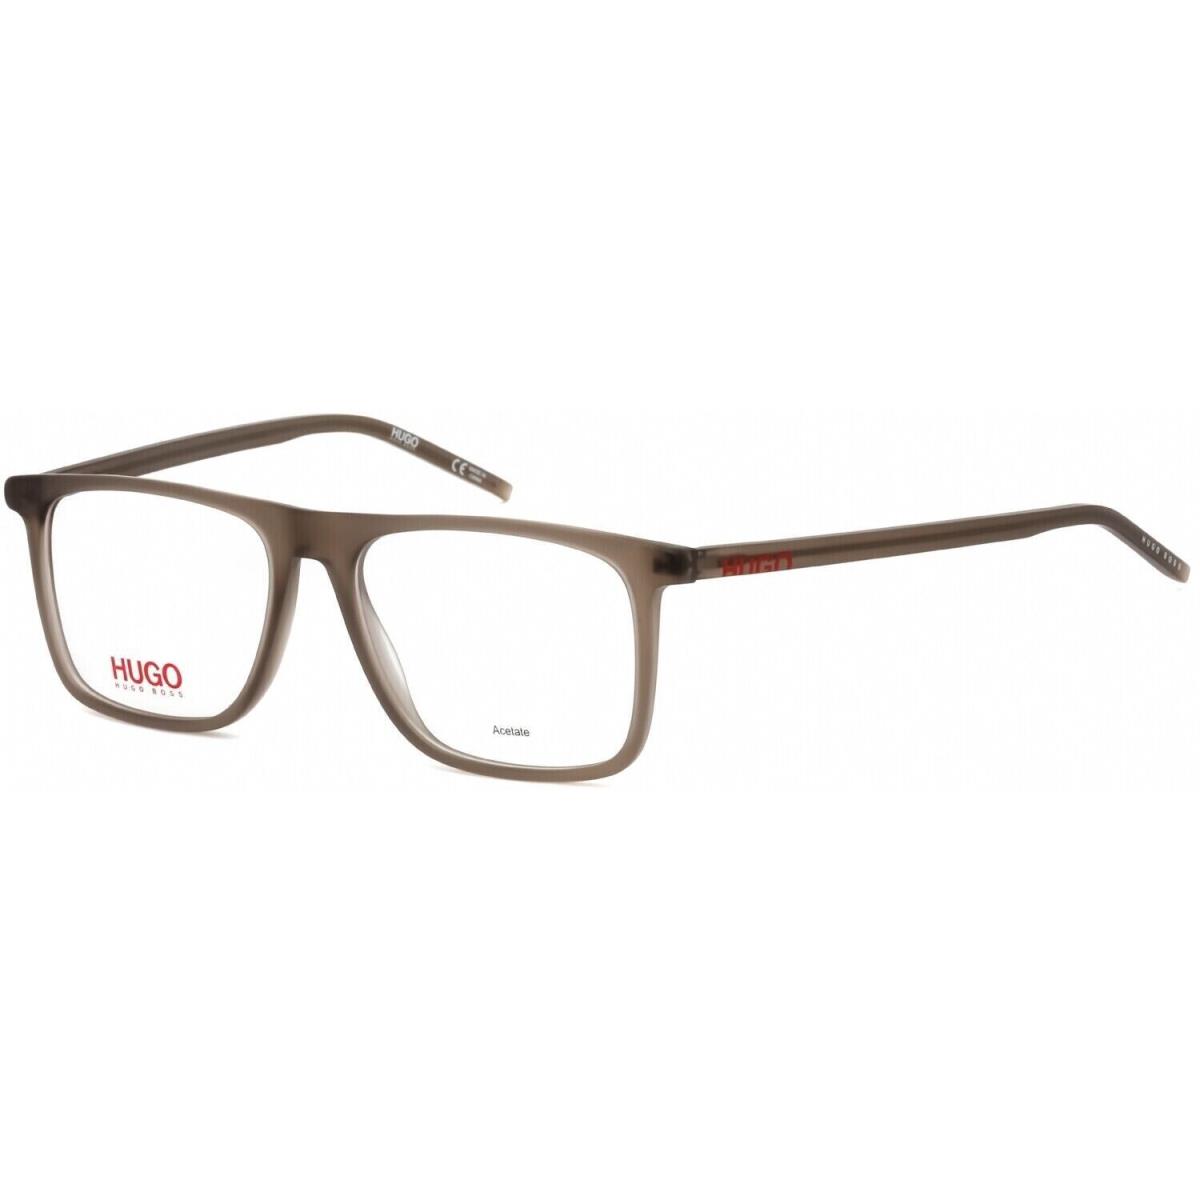 Hugo Boss Eyeglasses - HG 1057 04IN - Matte Brown 54-17-145 - Frame: Brown